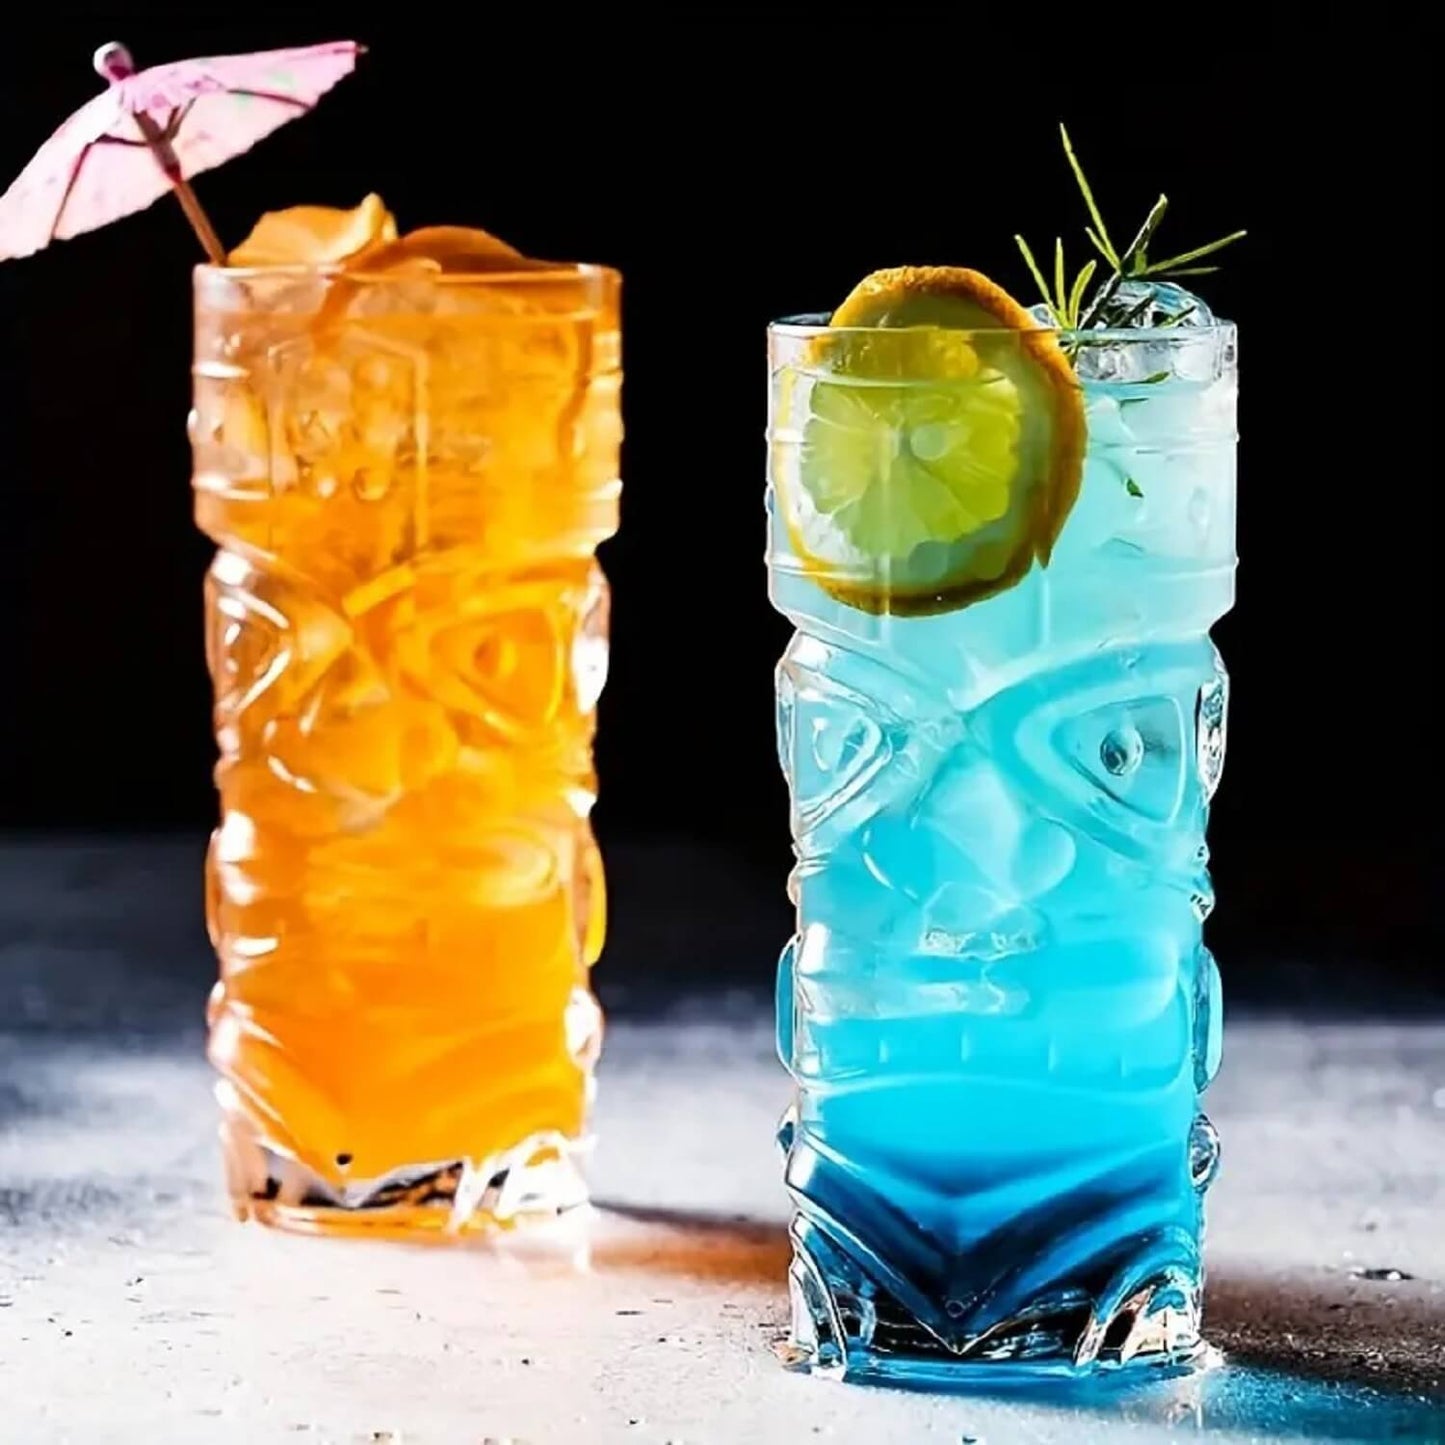 Premium Tiki Cocktails Glasses| Hawaiian Style Carved Design| 350 ml |Set of 6